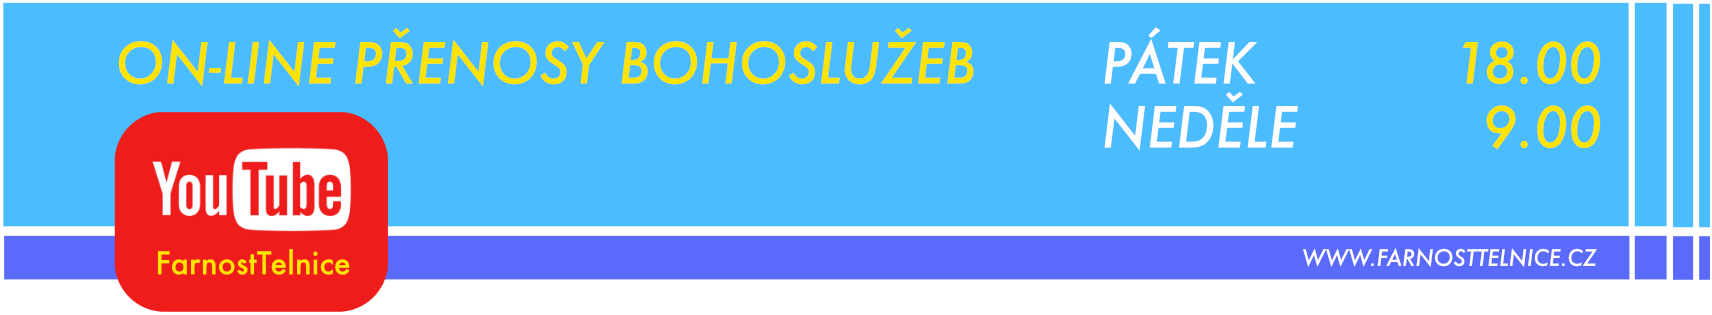 Broadcast-title:porad-bohosluzeb-18072021 web.png